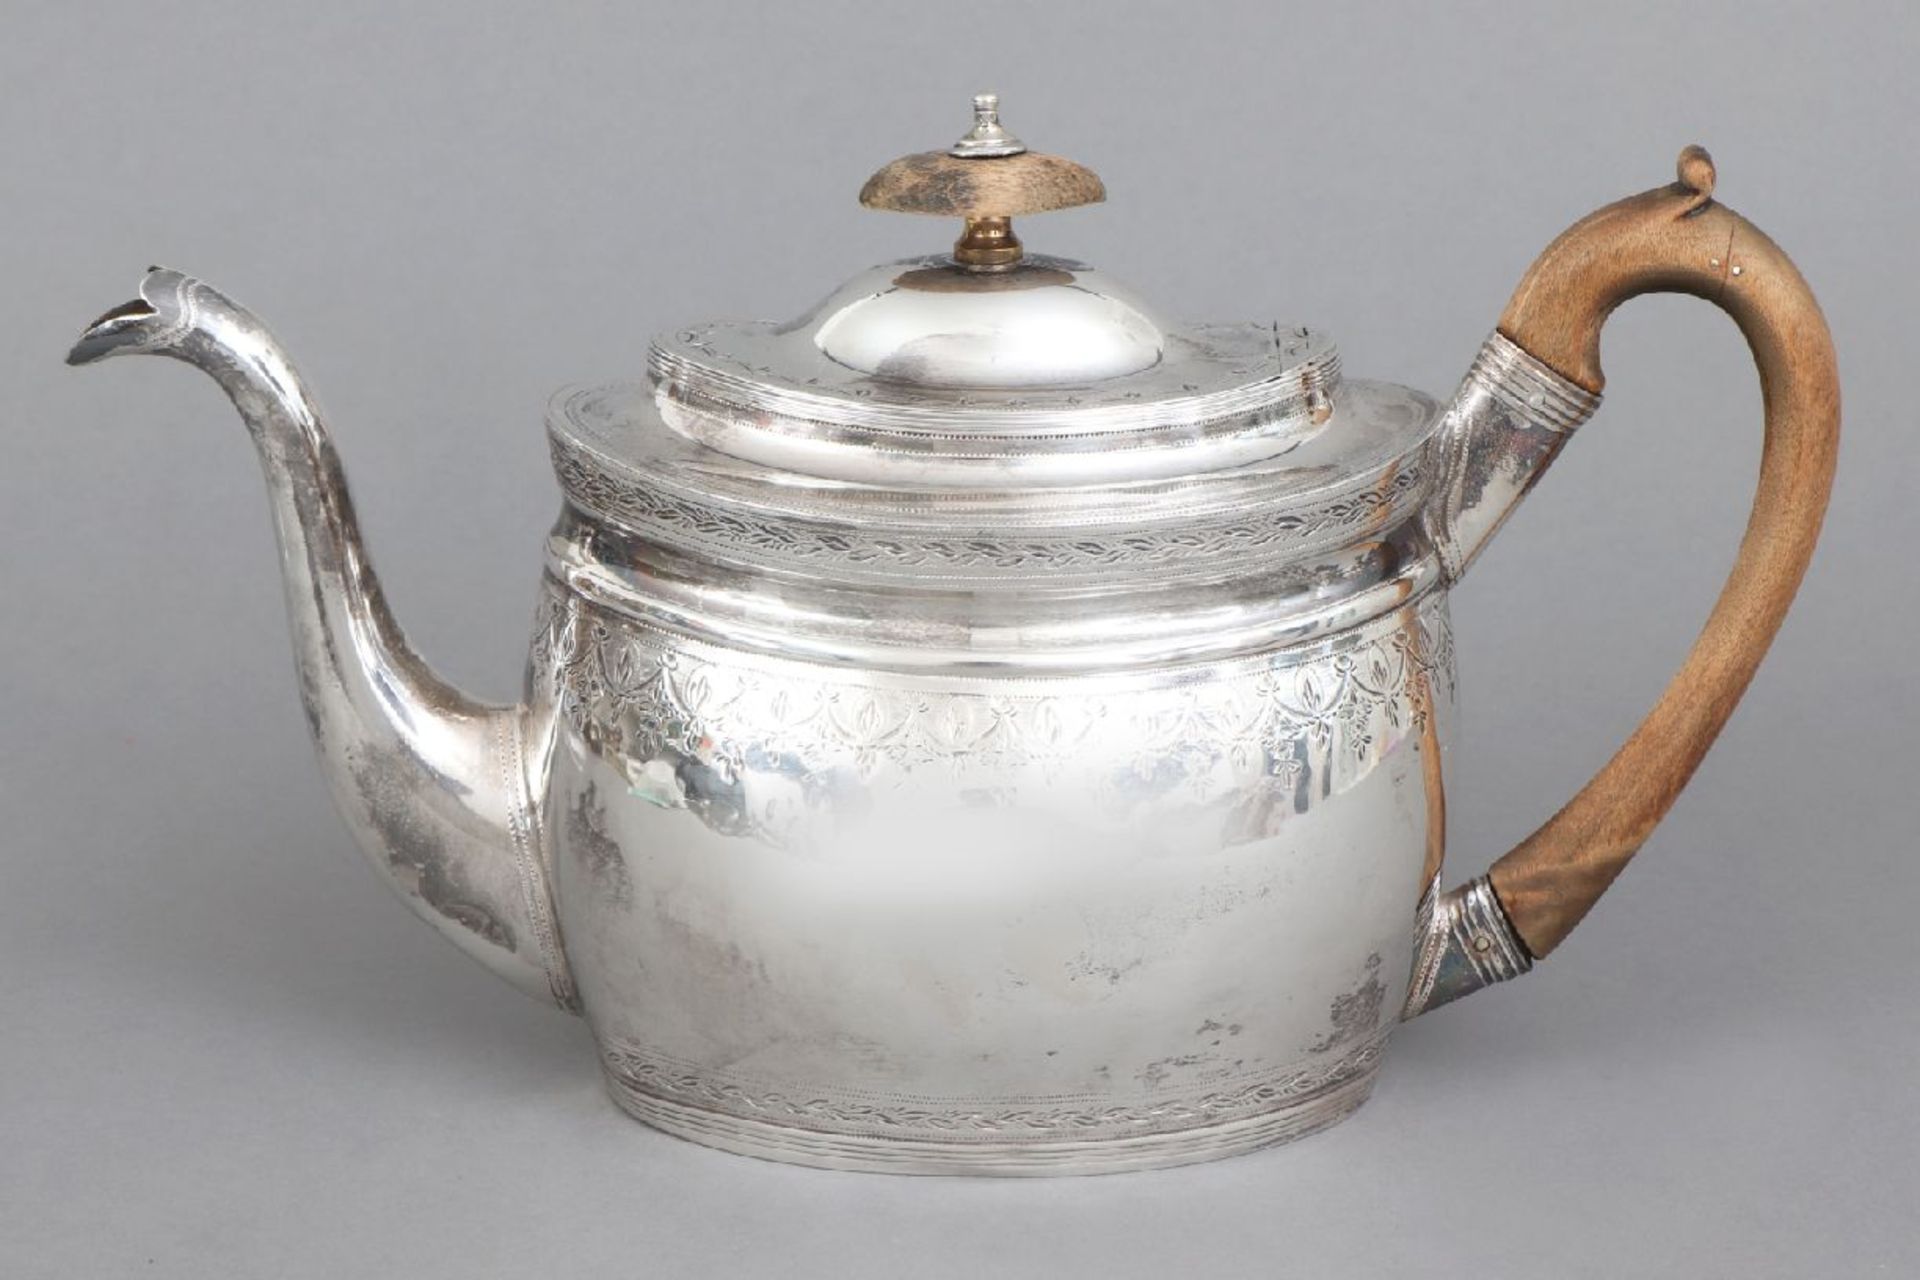 Silber TeekanneSterling Silber, London, 1799, Maker´s mark SDEN (Samuel & Edward Davenport),